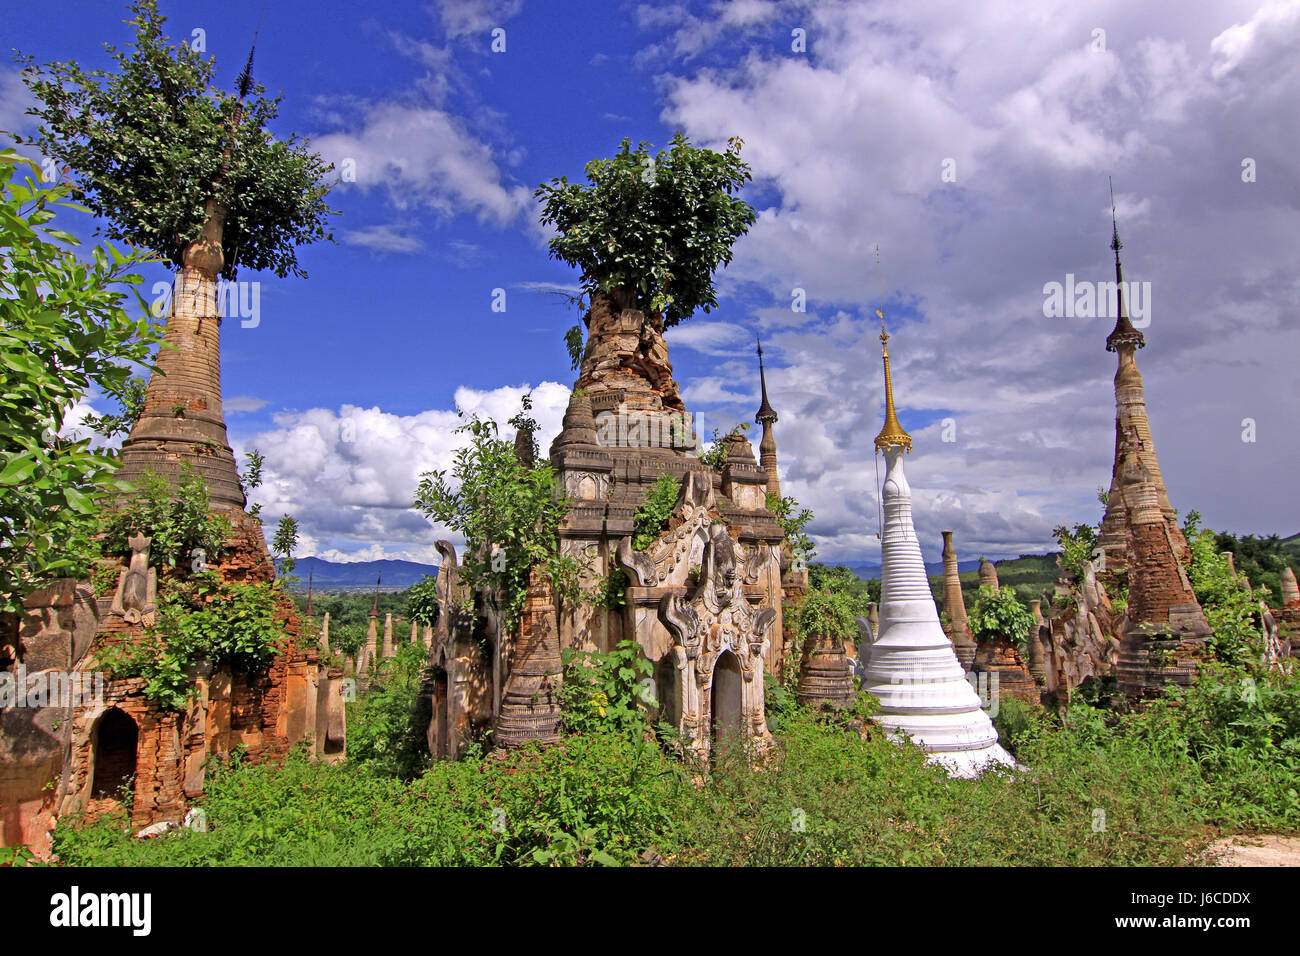 Myanmar nazioni pagoden indein birmania myanmar inleesee inle bagan mandalay pagana Foto Stock